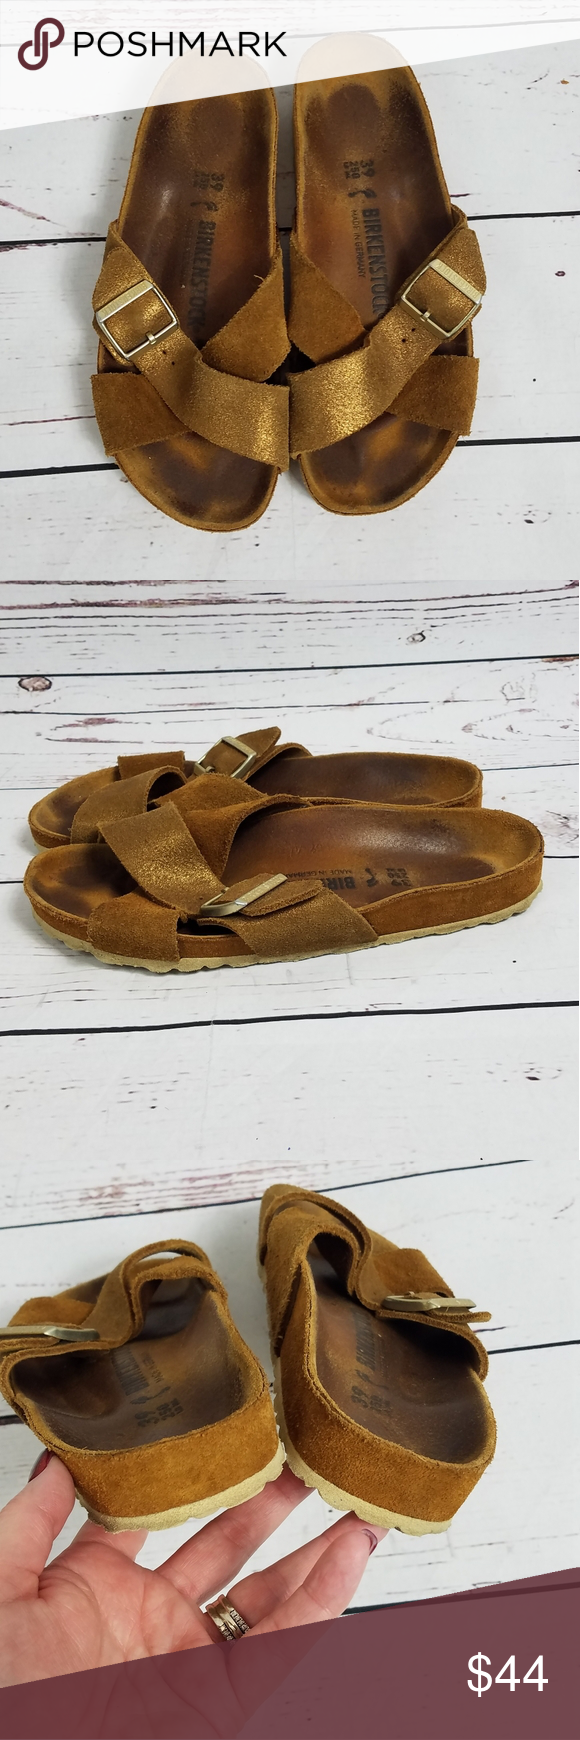 Birkenstock sandals size 39 Preloved in good condition Birkenstock sandals in a …